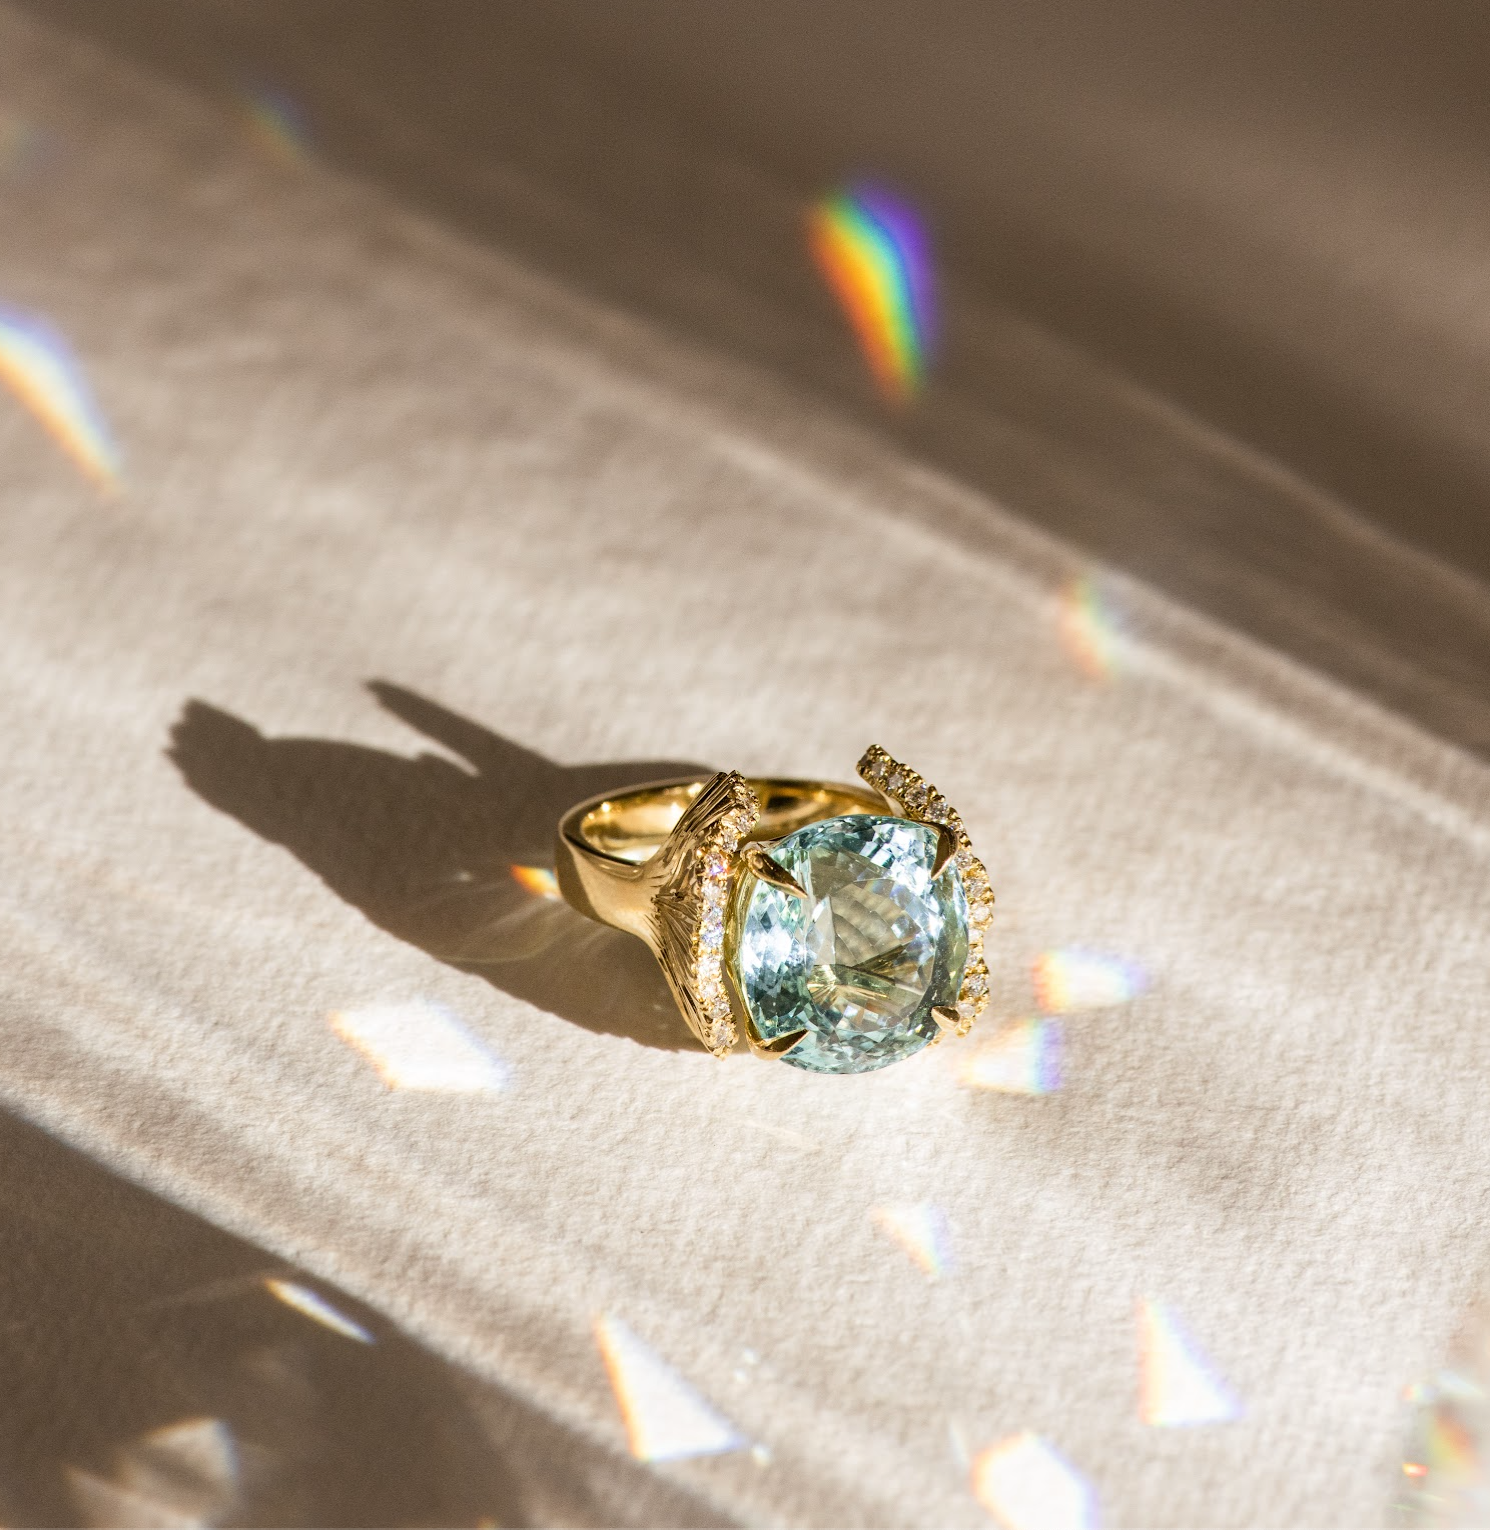 Aquamarine & Diamond Dress Ring - Bespoke Design - Dean & Dust - Four Claw - Cushion Stone - Art Deco Design